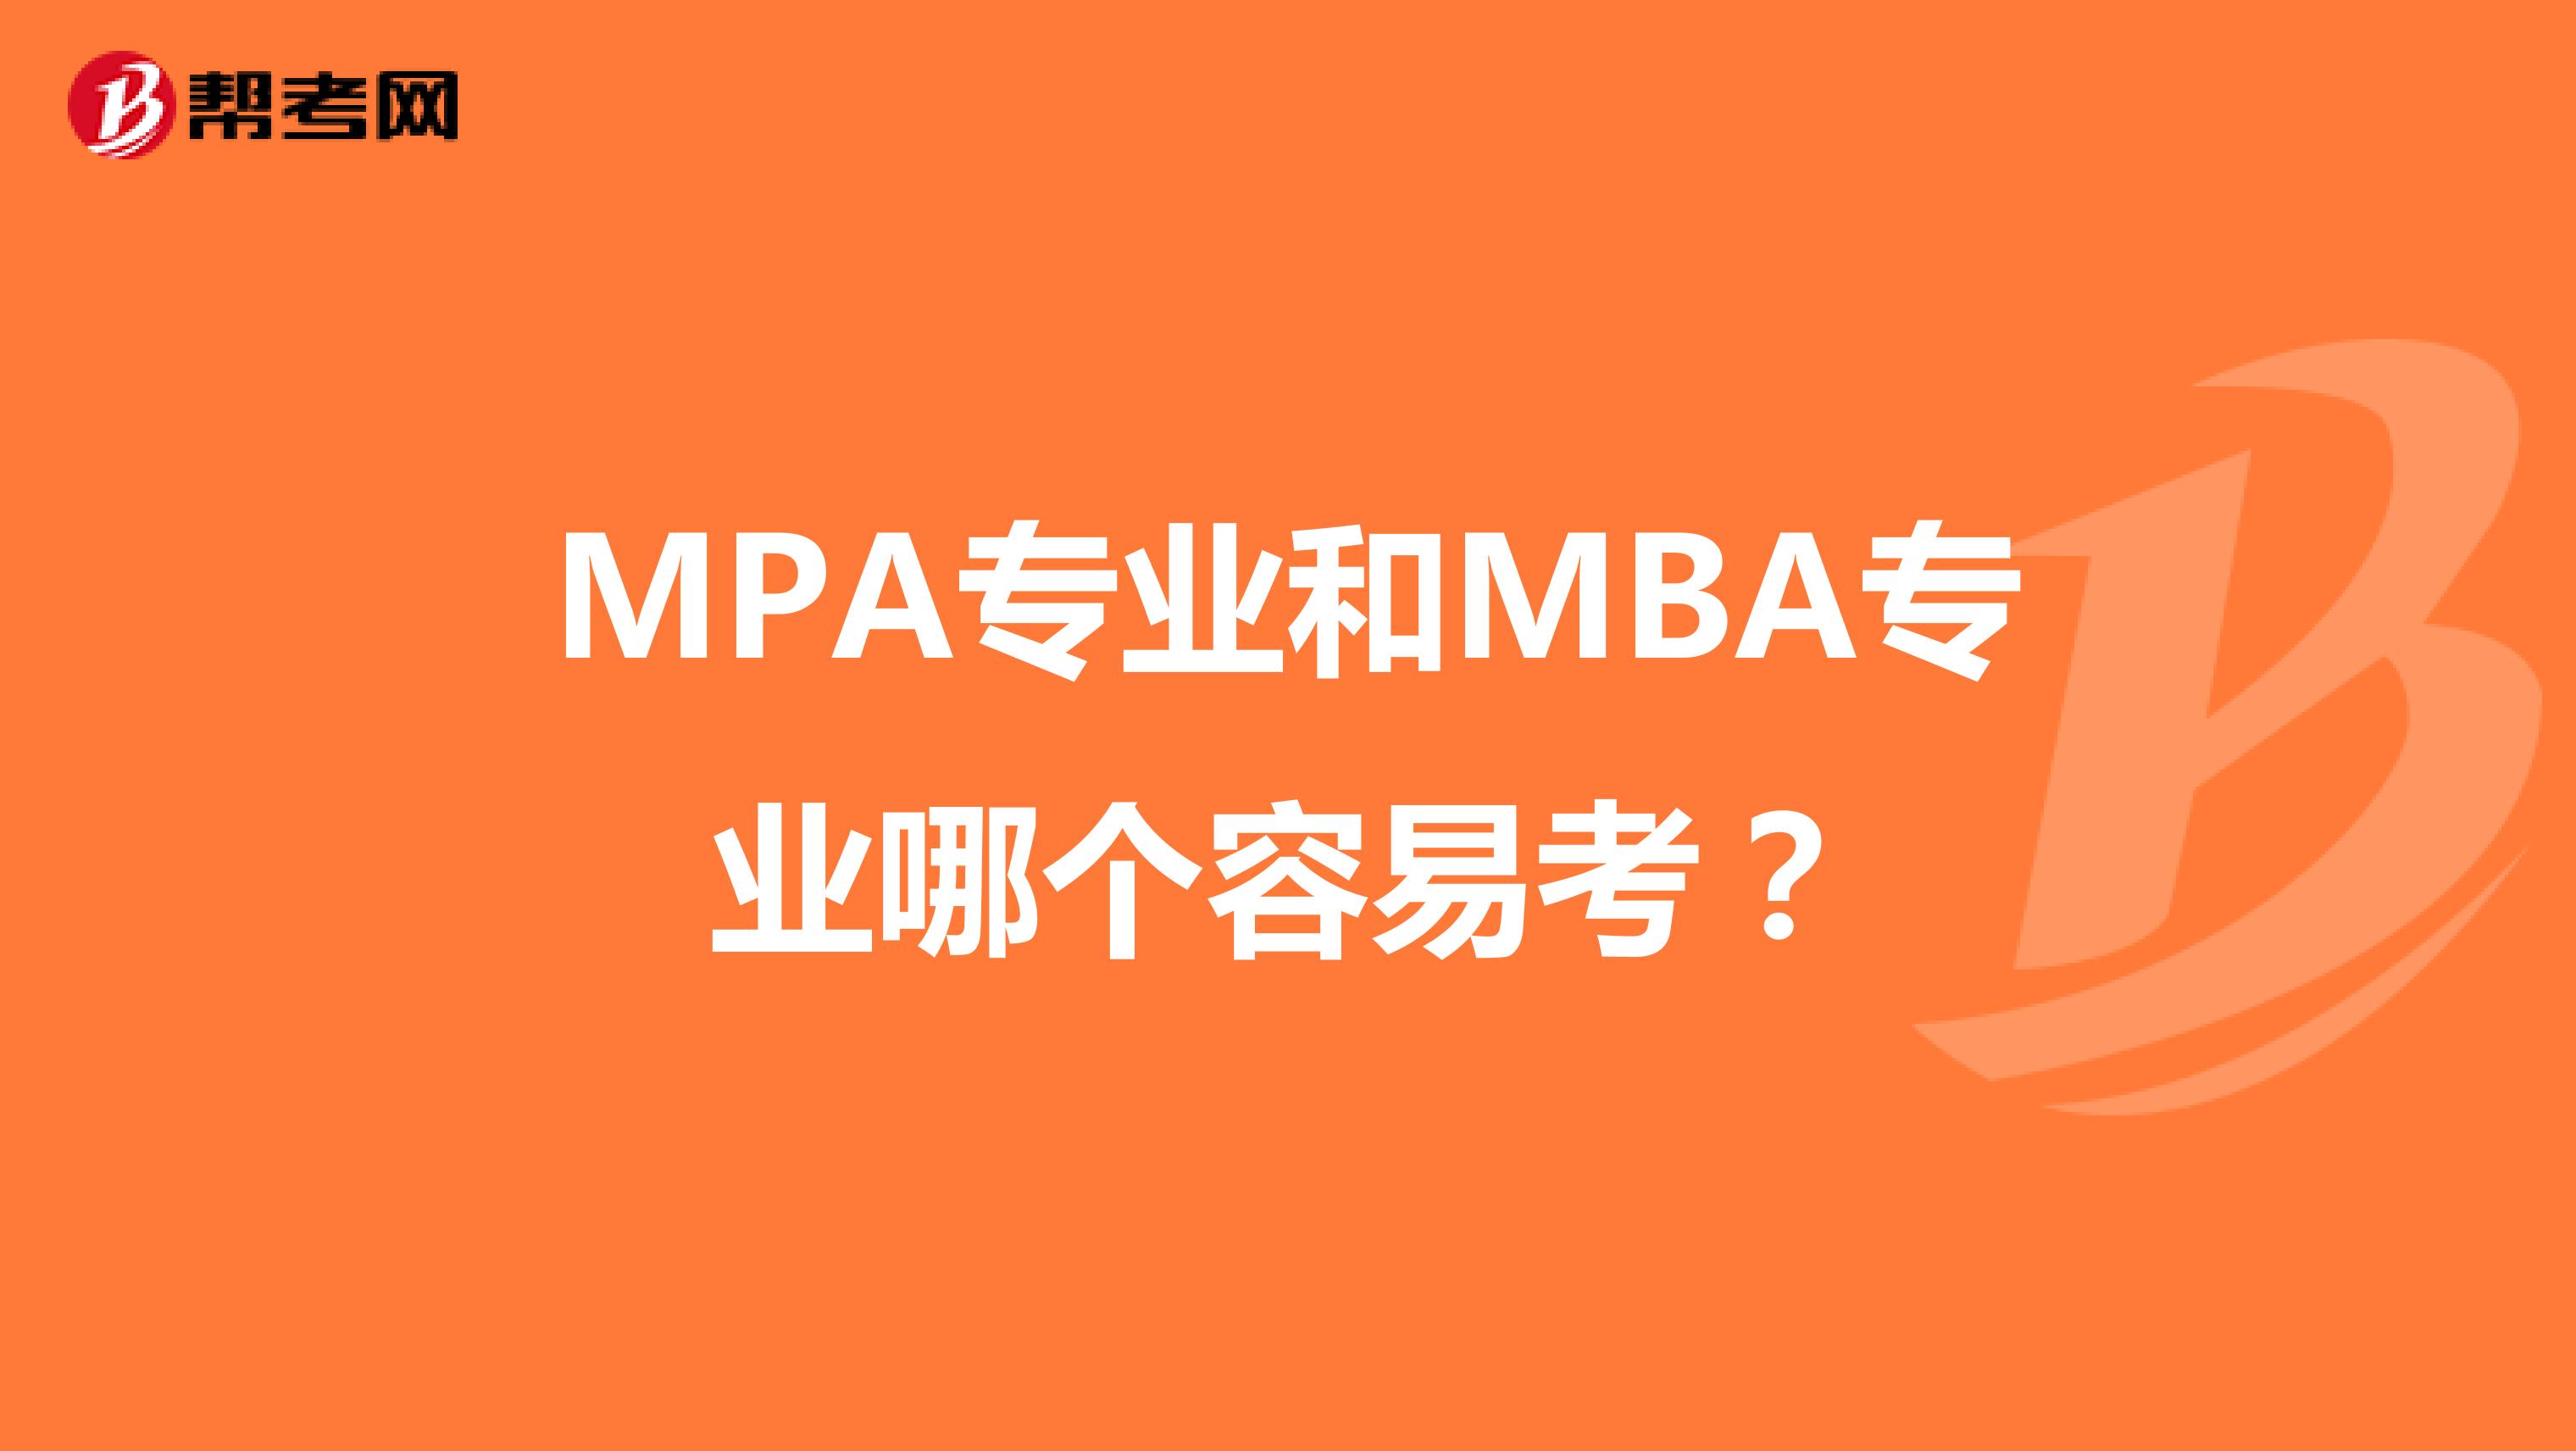 MPA专业和MBA专业哪个容易考？